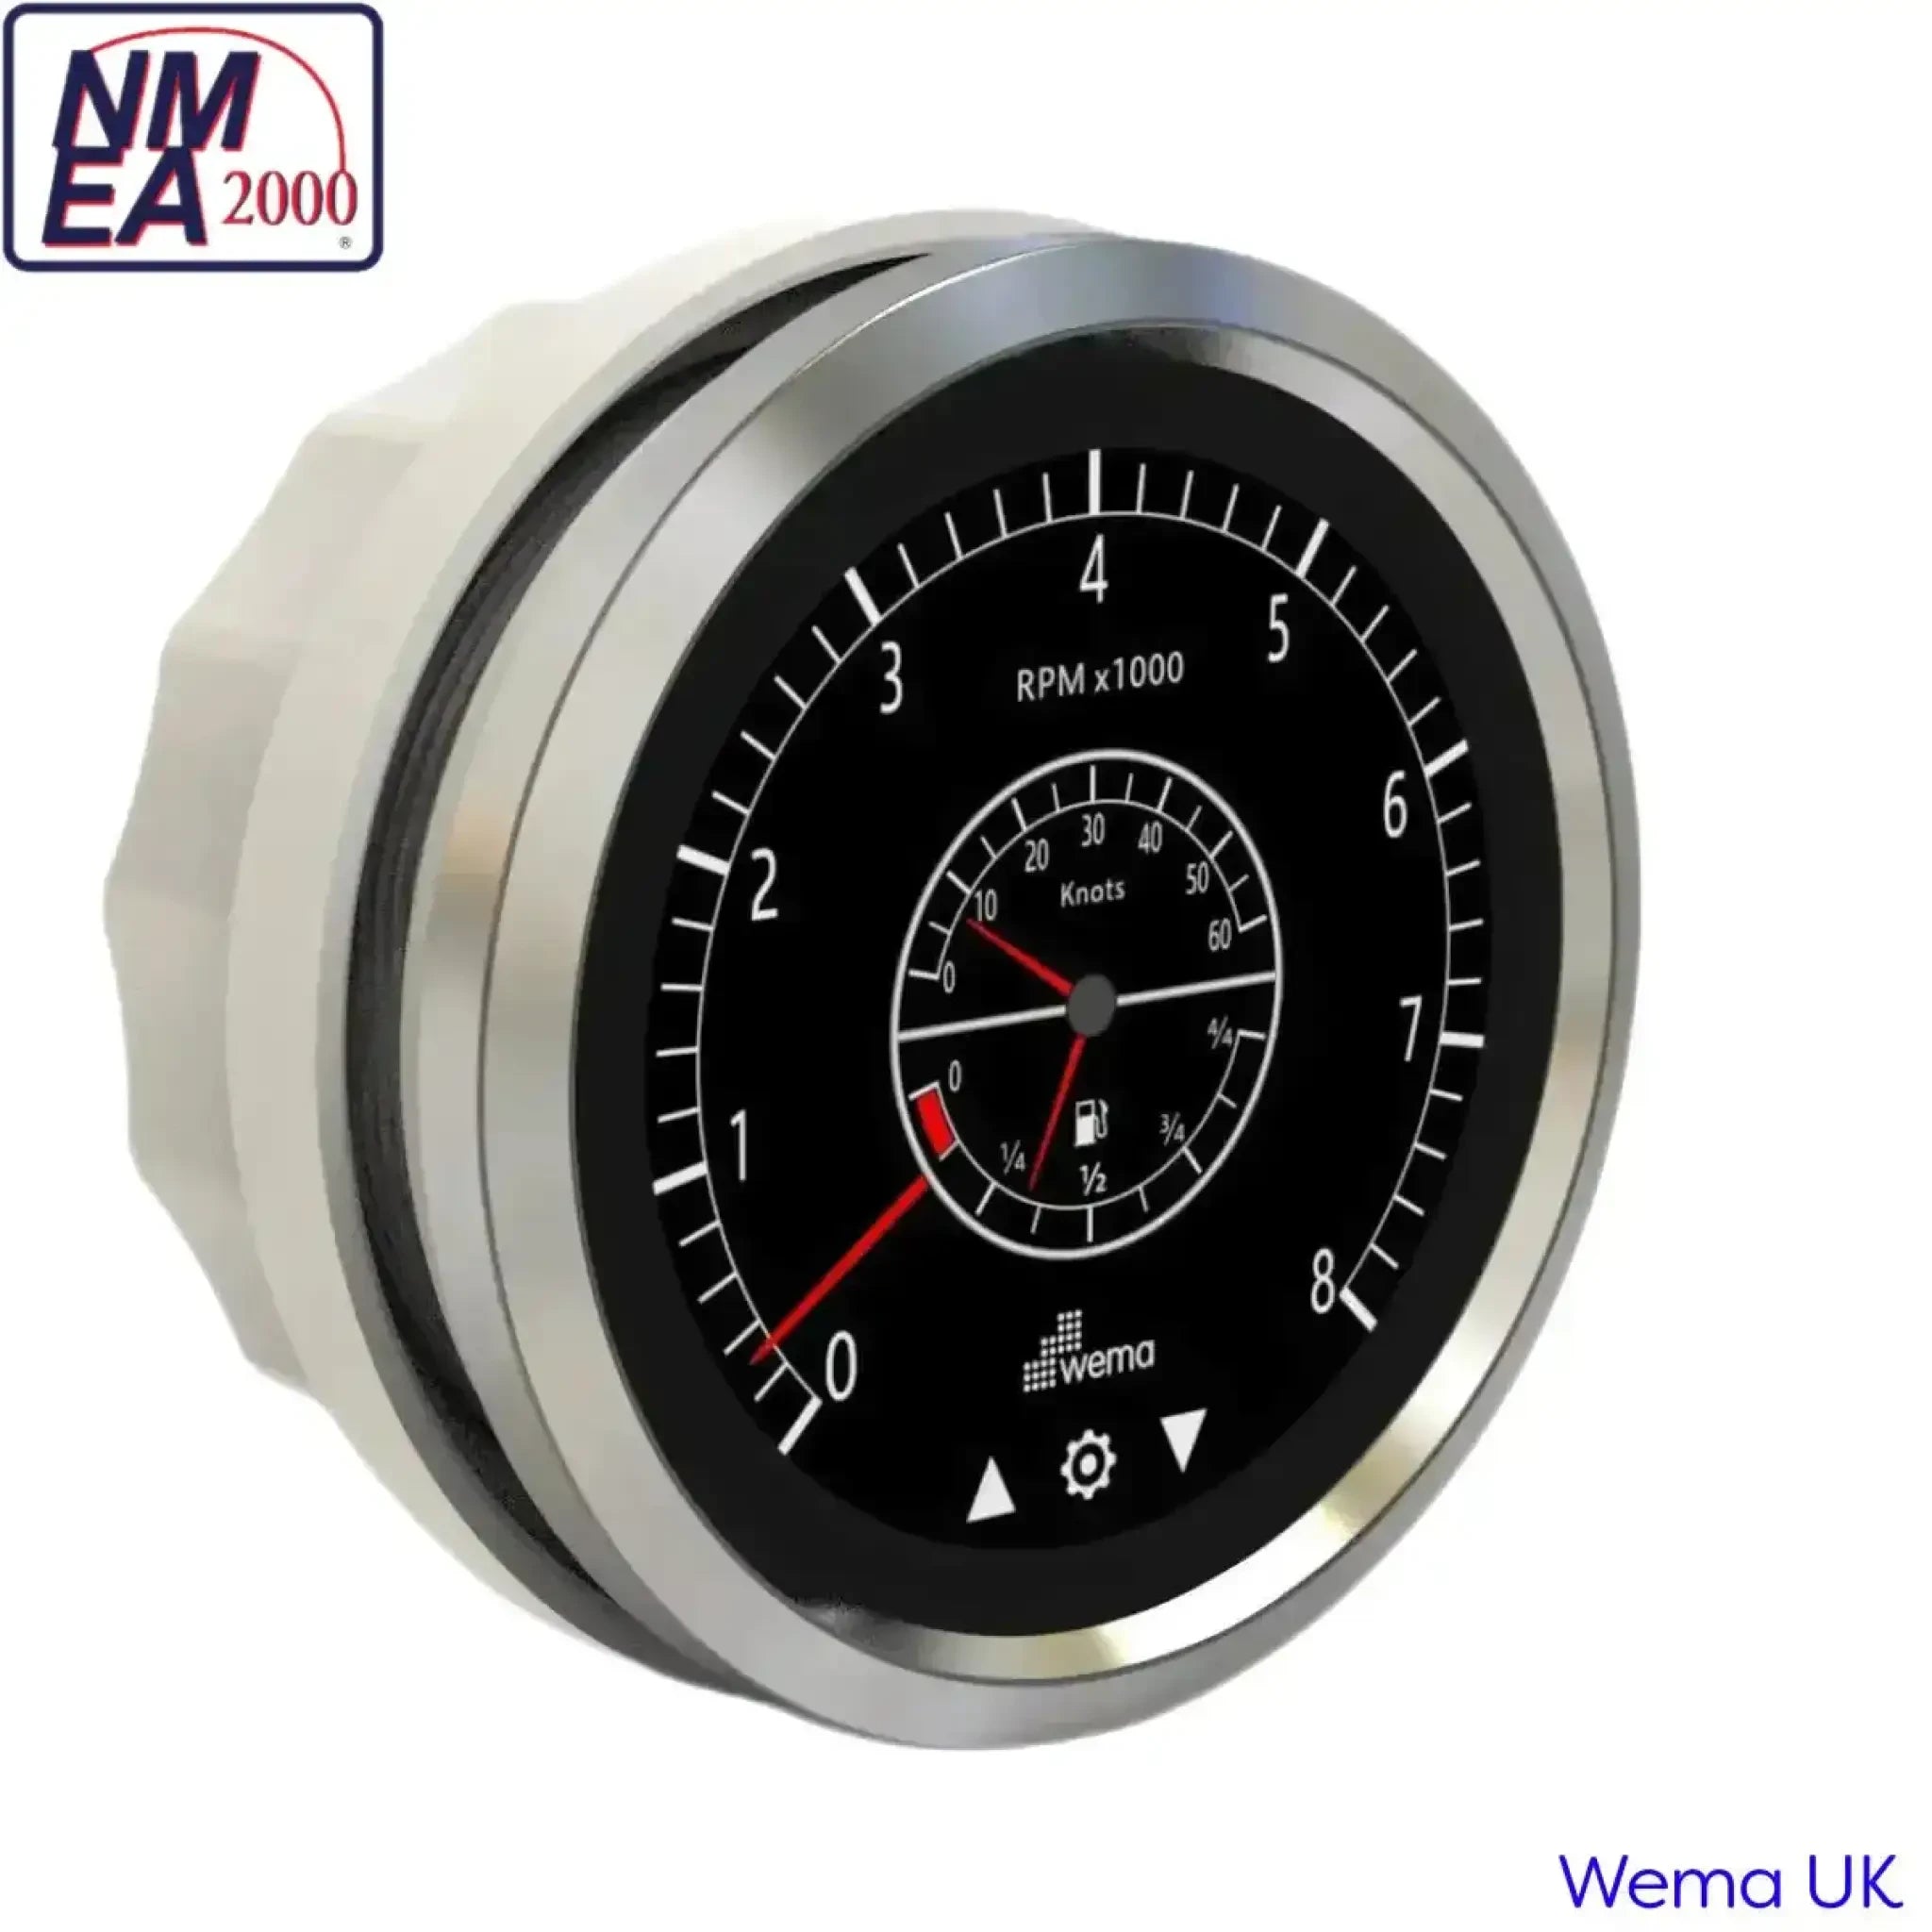 12v DC Voltage Regulator - Wema UK